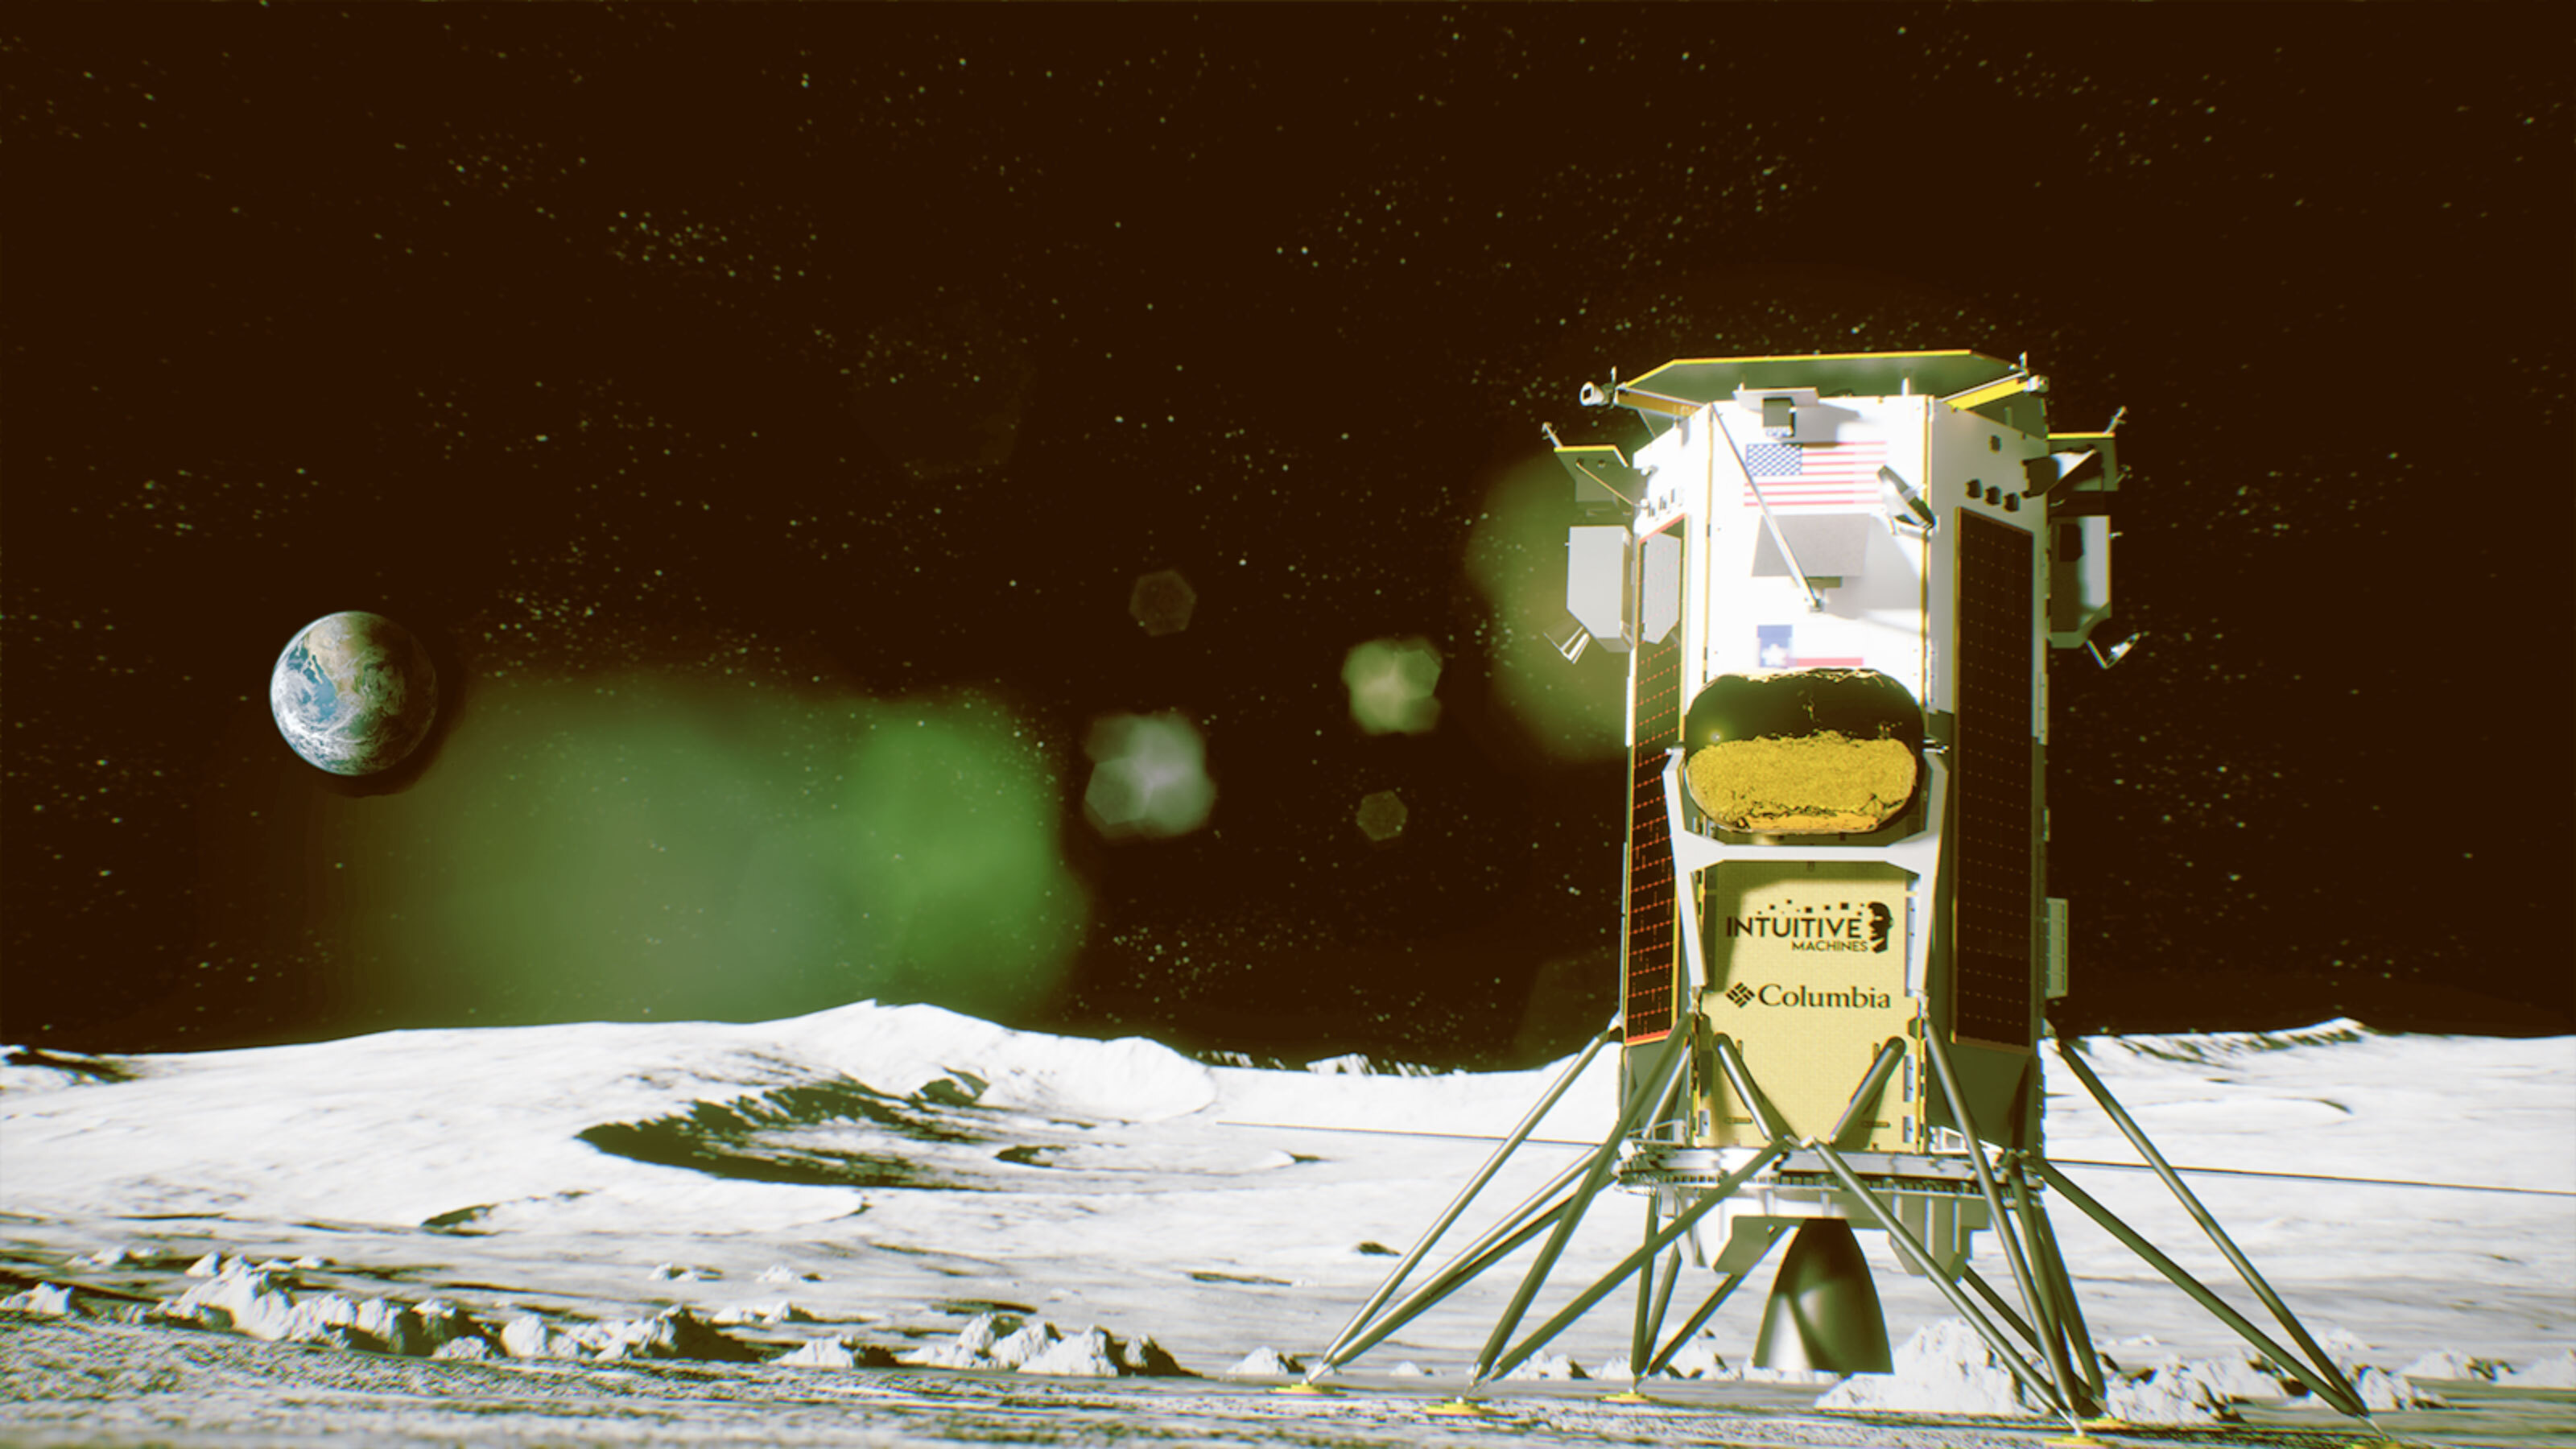 US startup makes history with stressful, landmark moon landing